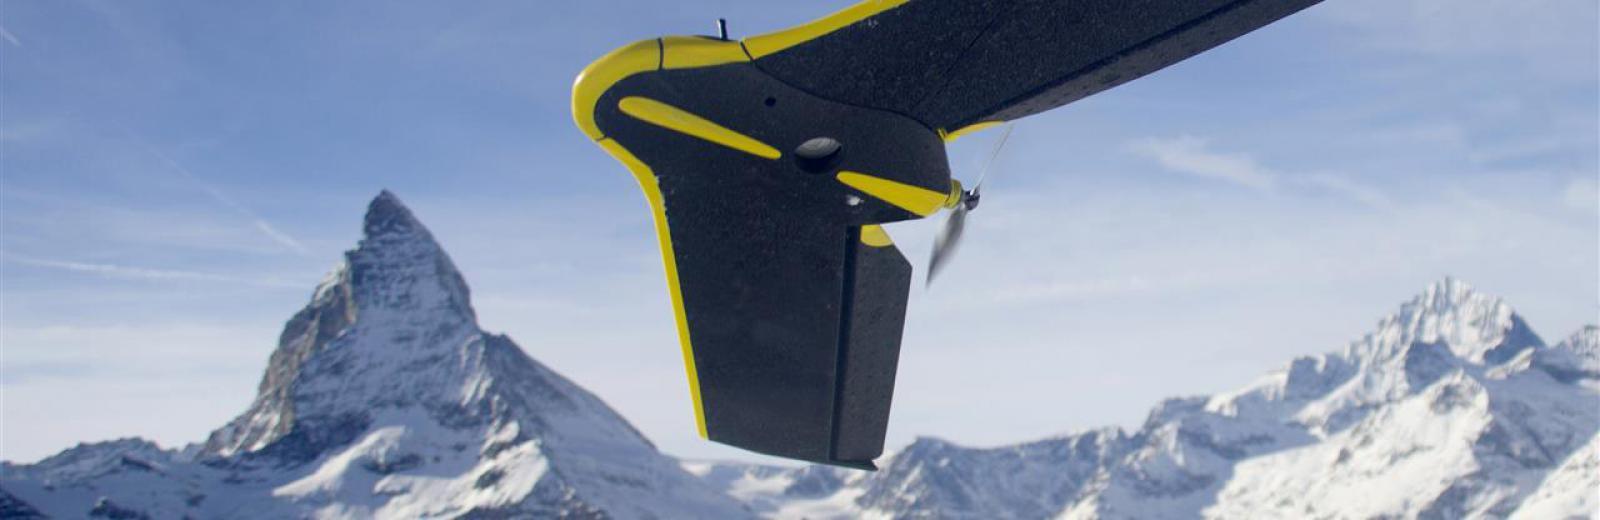 Schweizer Drohne vor dem Matterhorn